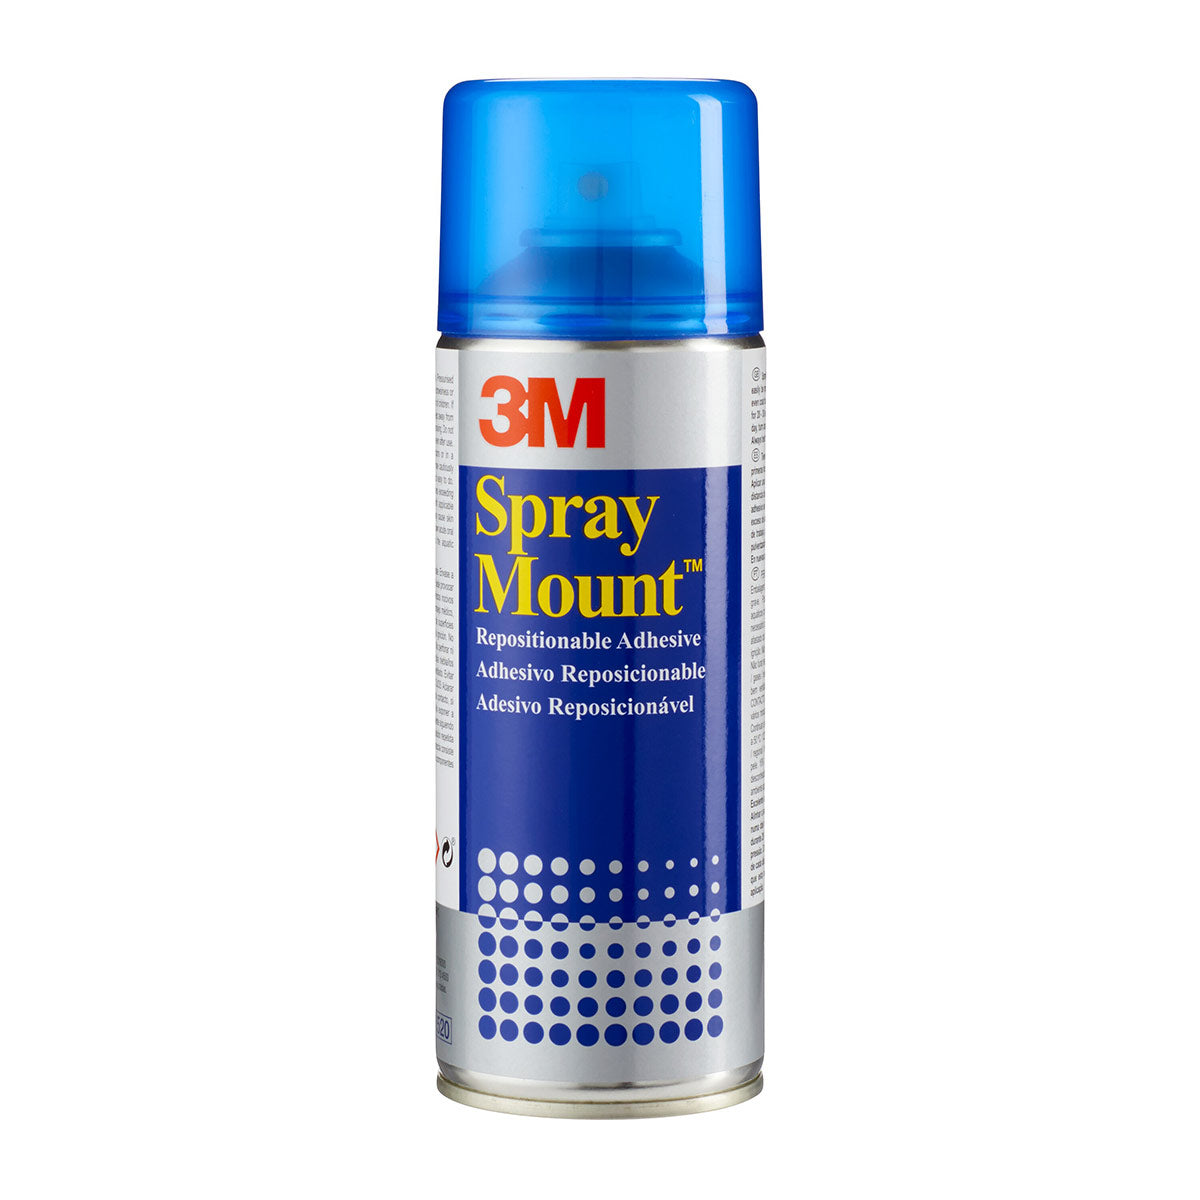 3M Spray Mount - Repositionable - 400ml